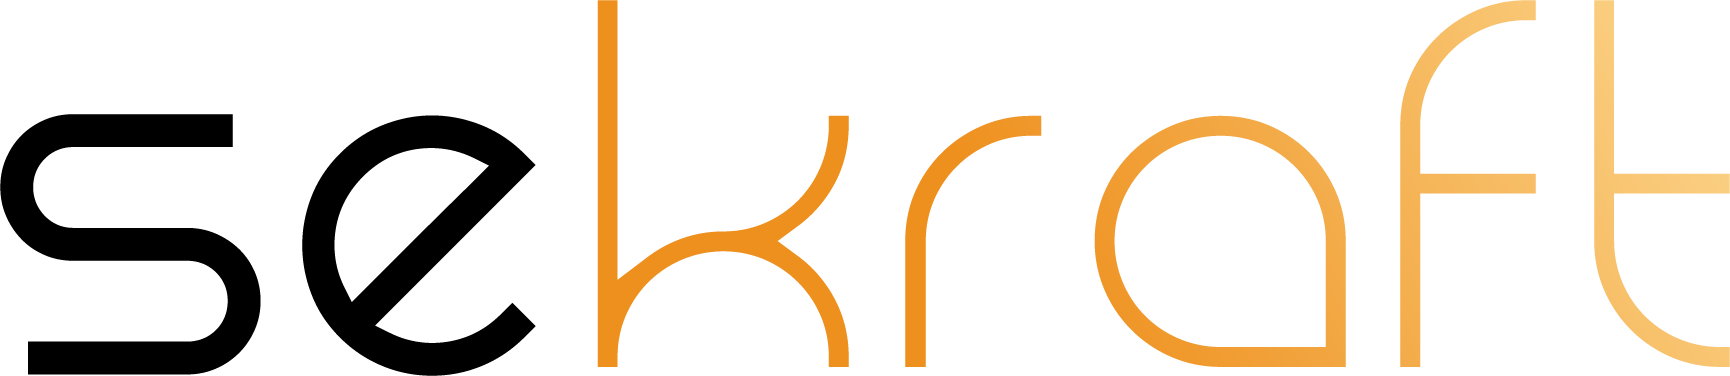 sekraft logo